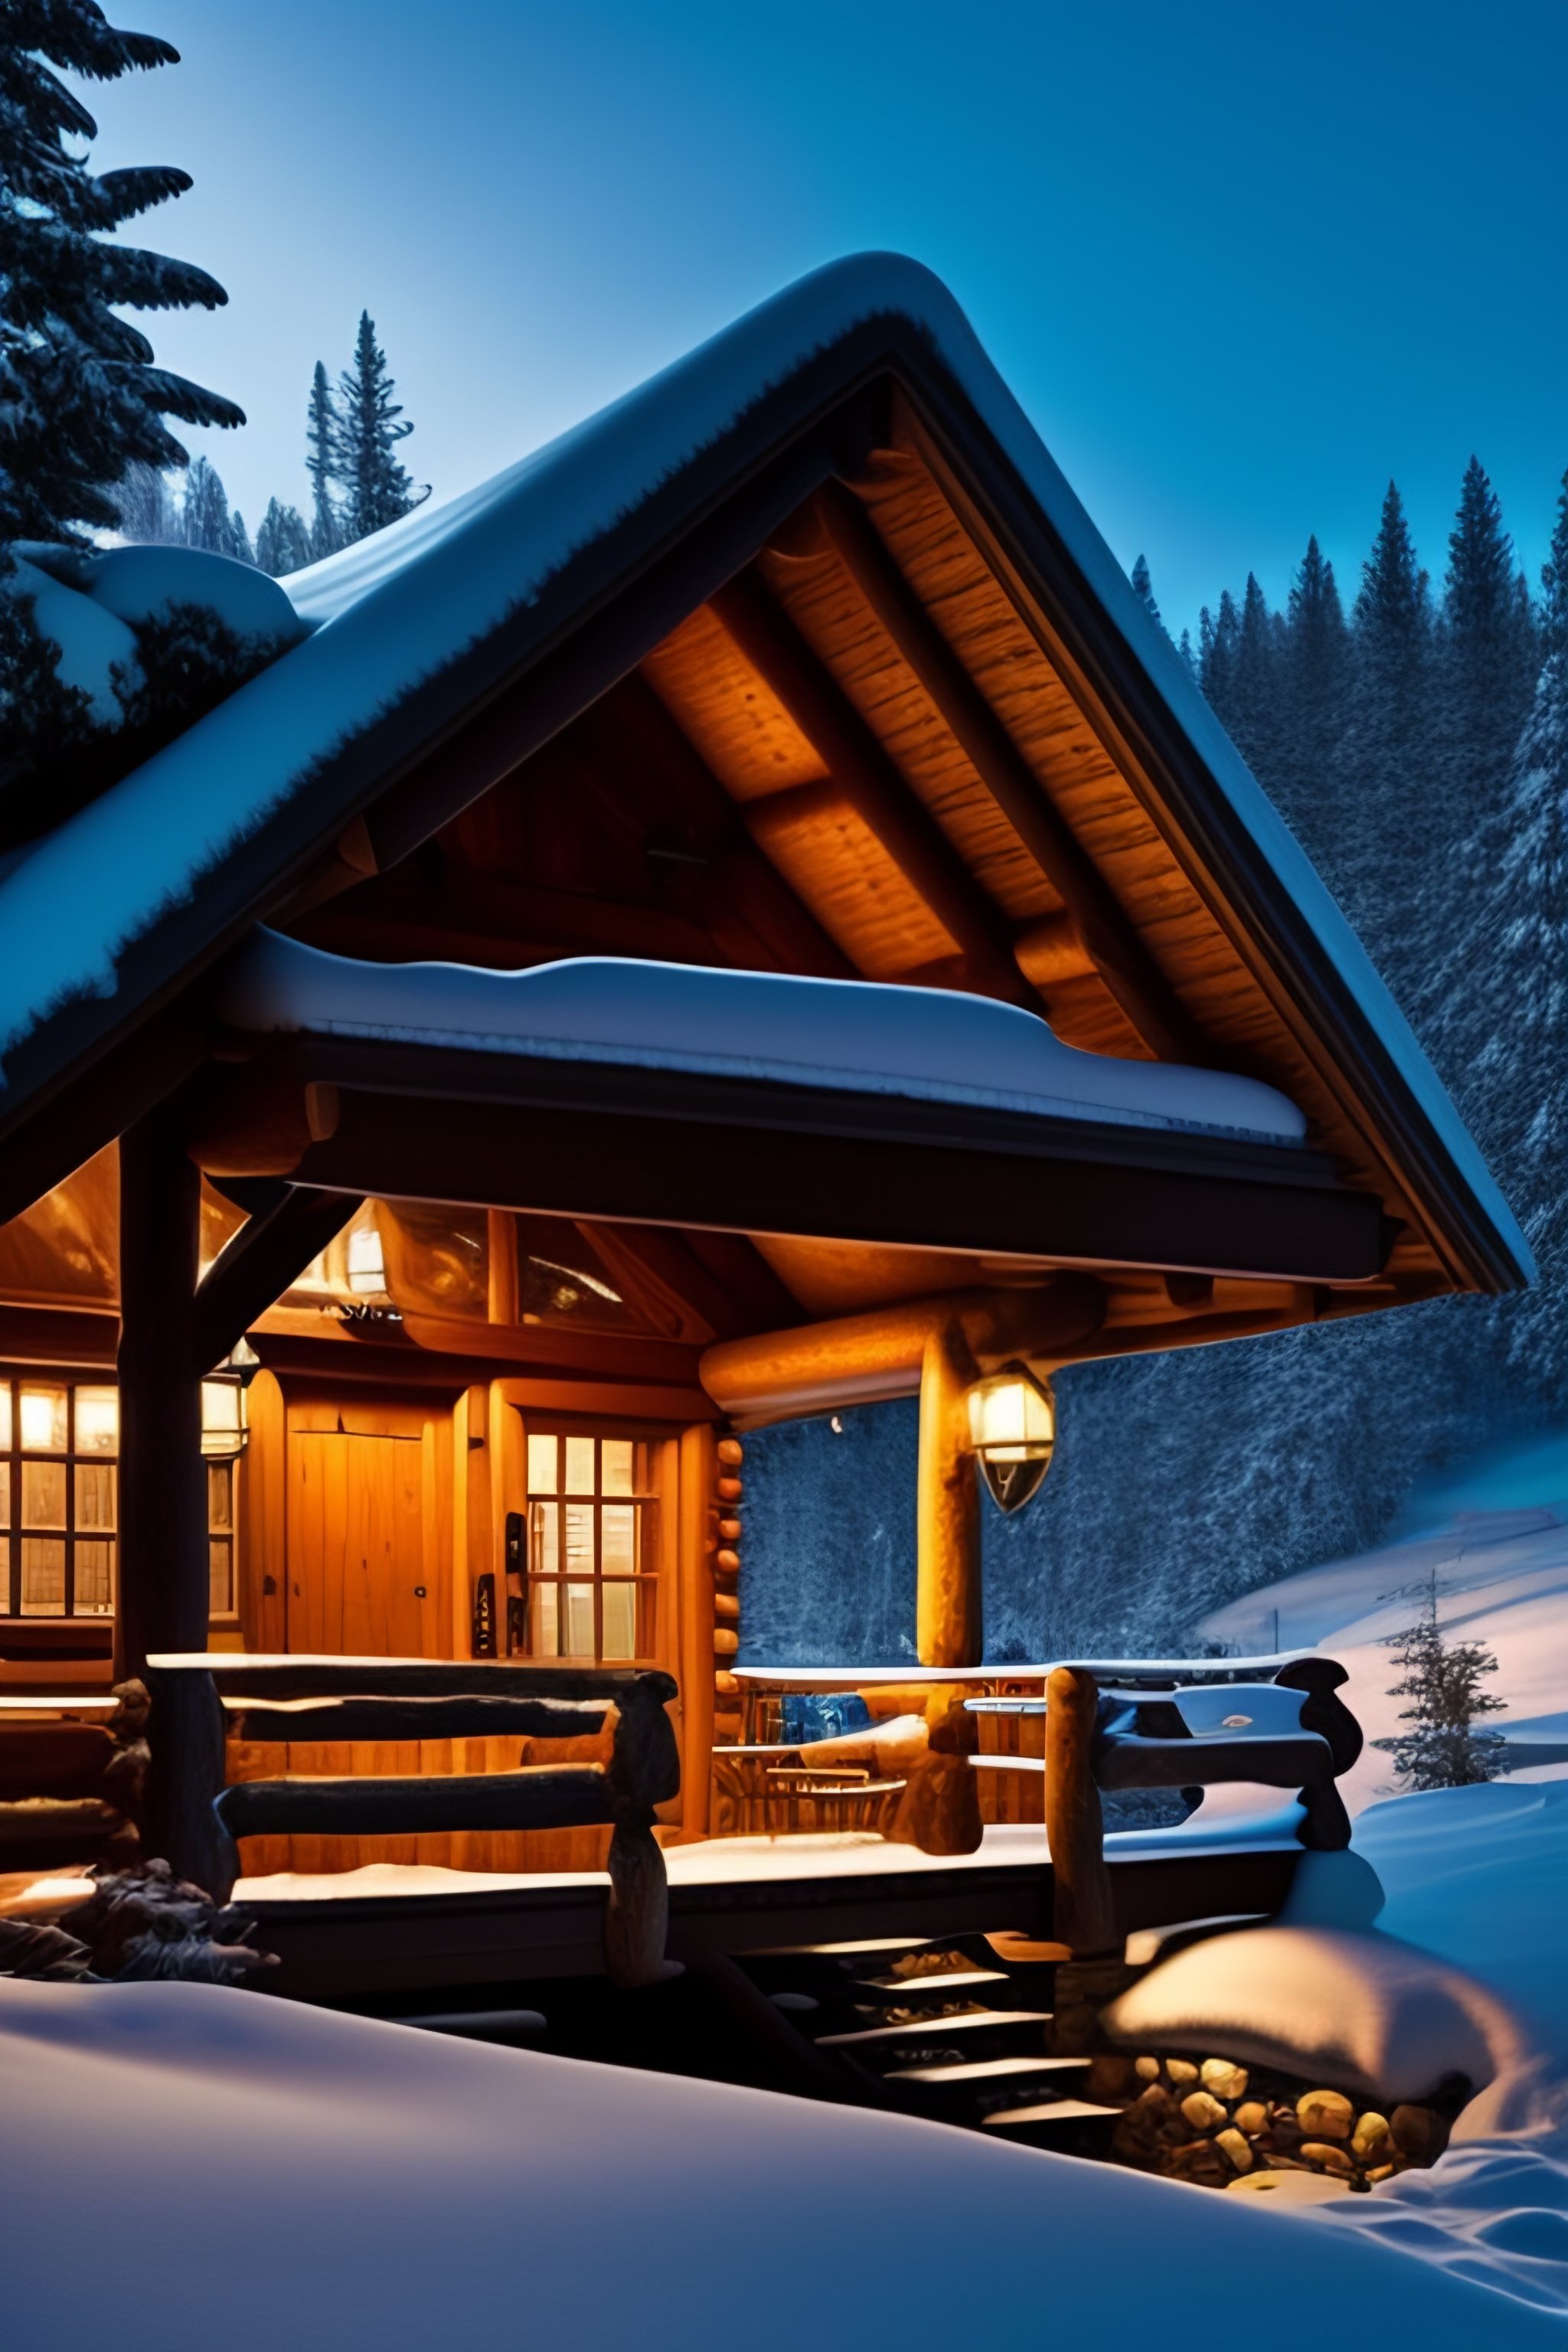 10 Classic Alpine Winter Apres Ski Recipes for your family